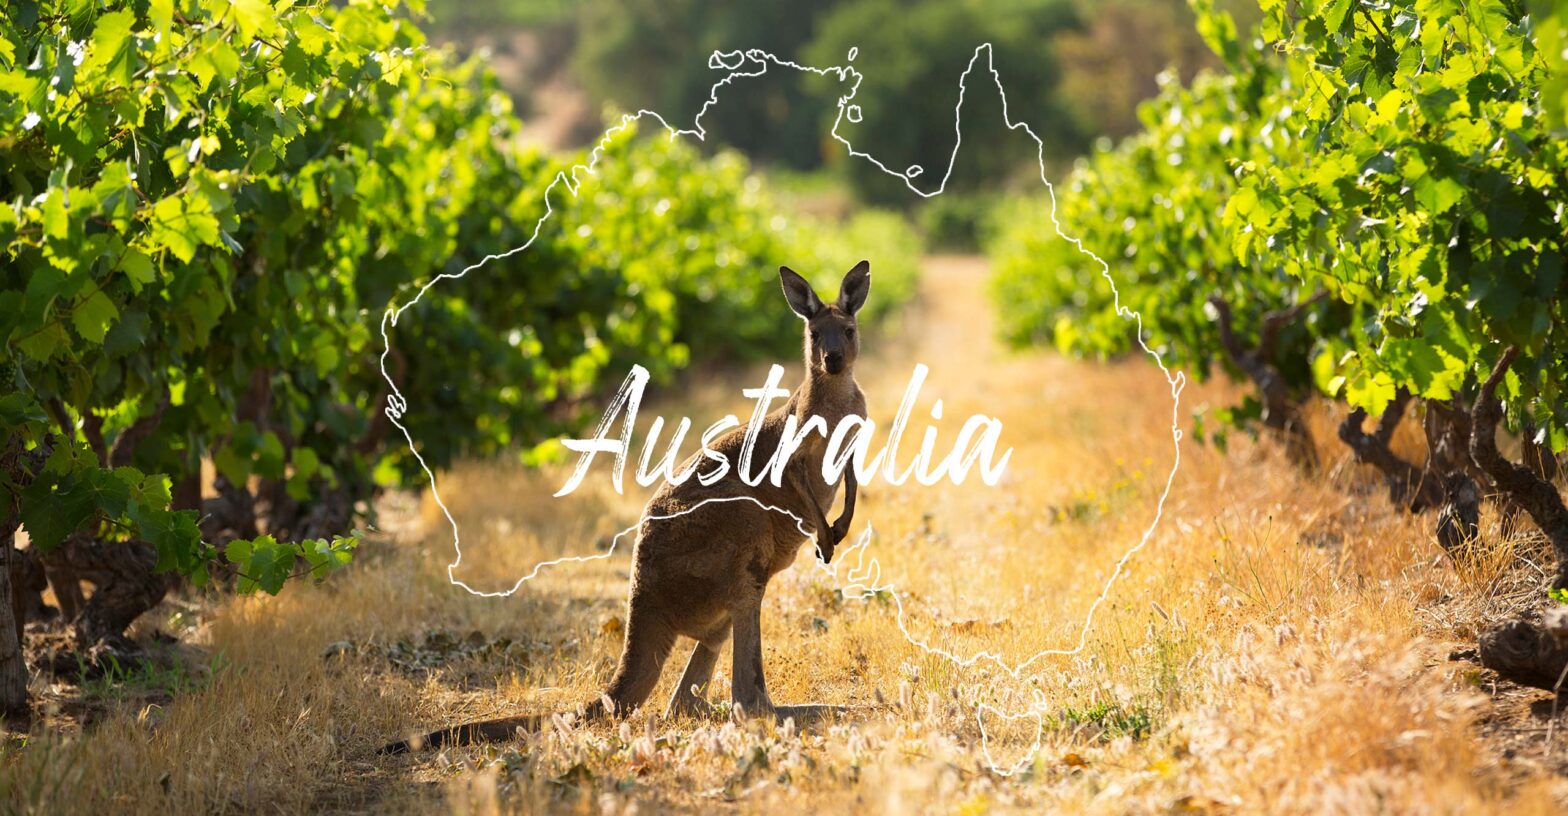 What wine is native to Australia?